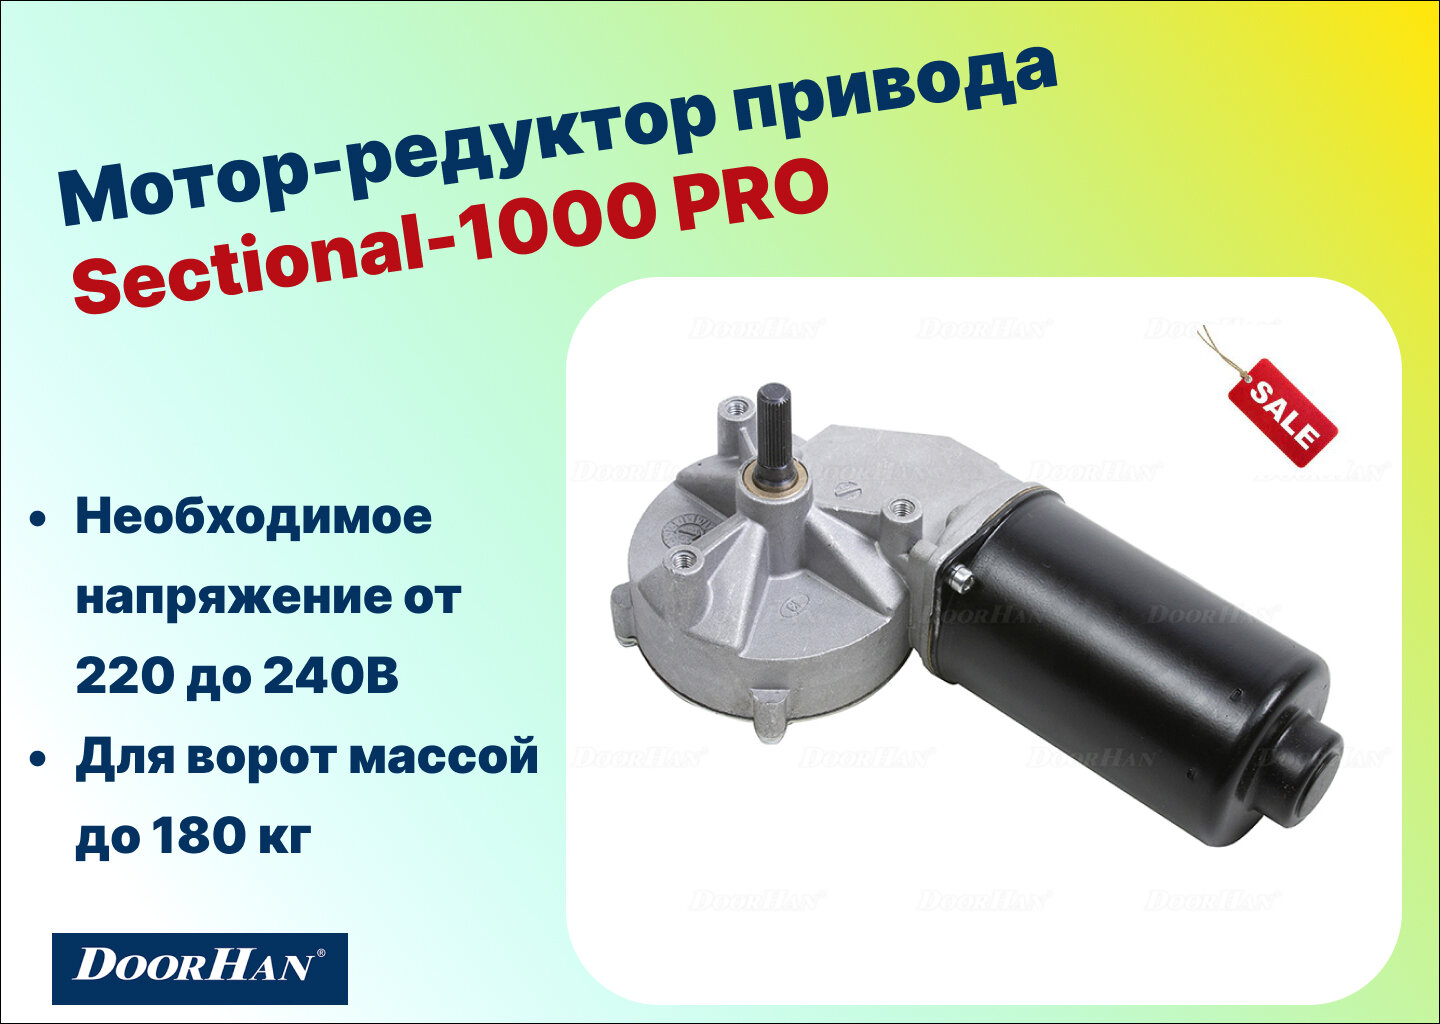 Мотор-редуктор привода Sectional-1000 PRO, DHG136 (DoorHan)